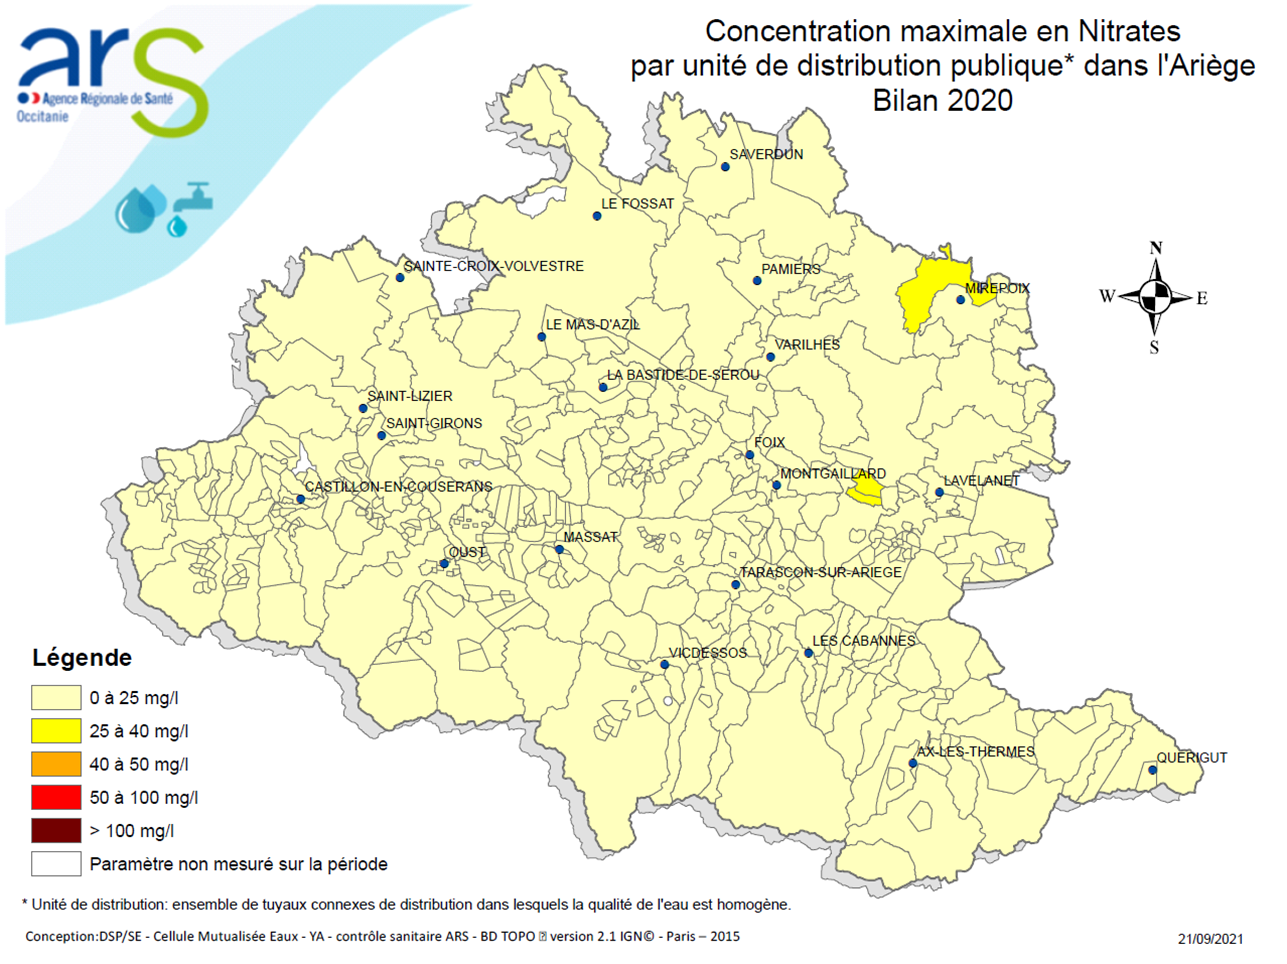 Nitrates Ariège (Bilan eau 2020)